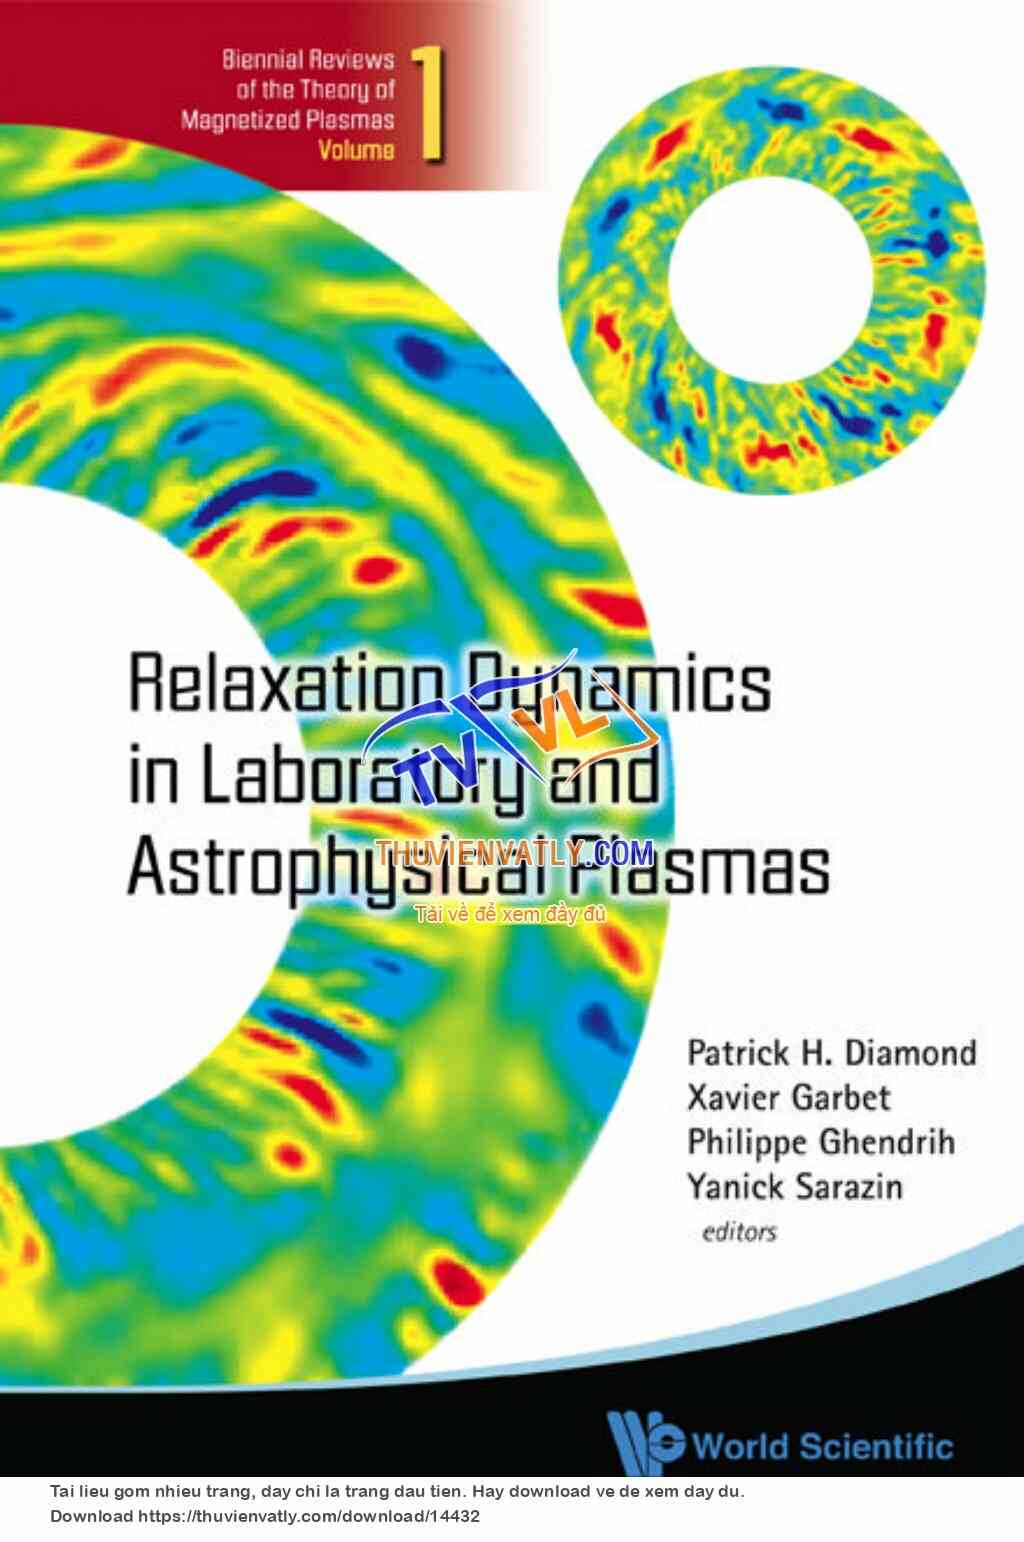 Relaxation Dynamics in Lab., Astrophysical Plasmas - P. Diamond, et. al., (World, 2010)